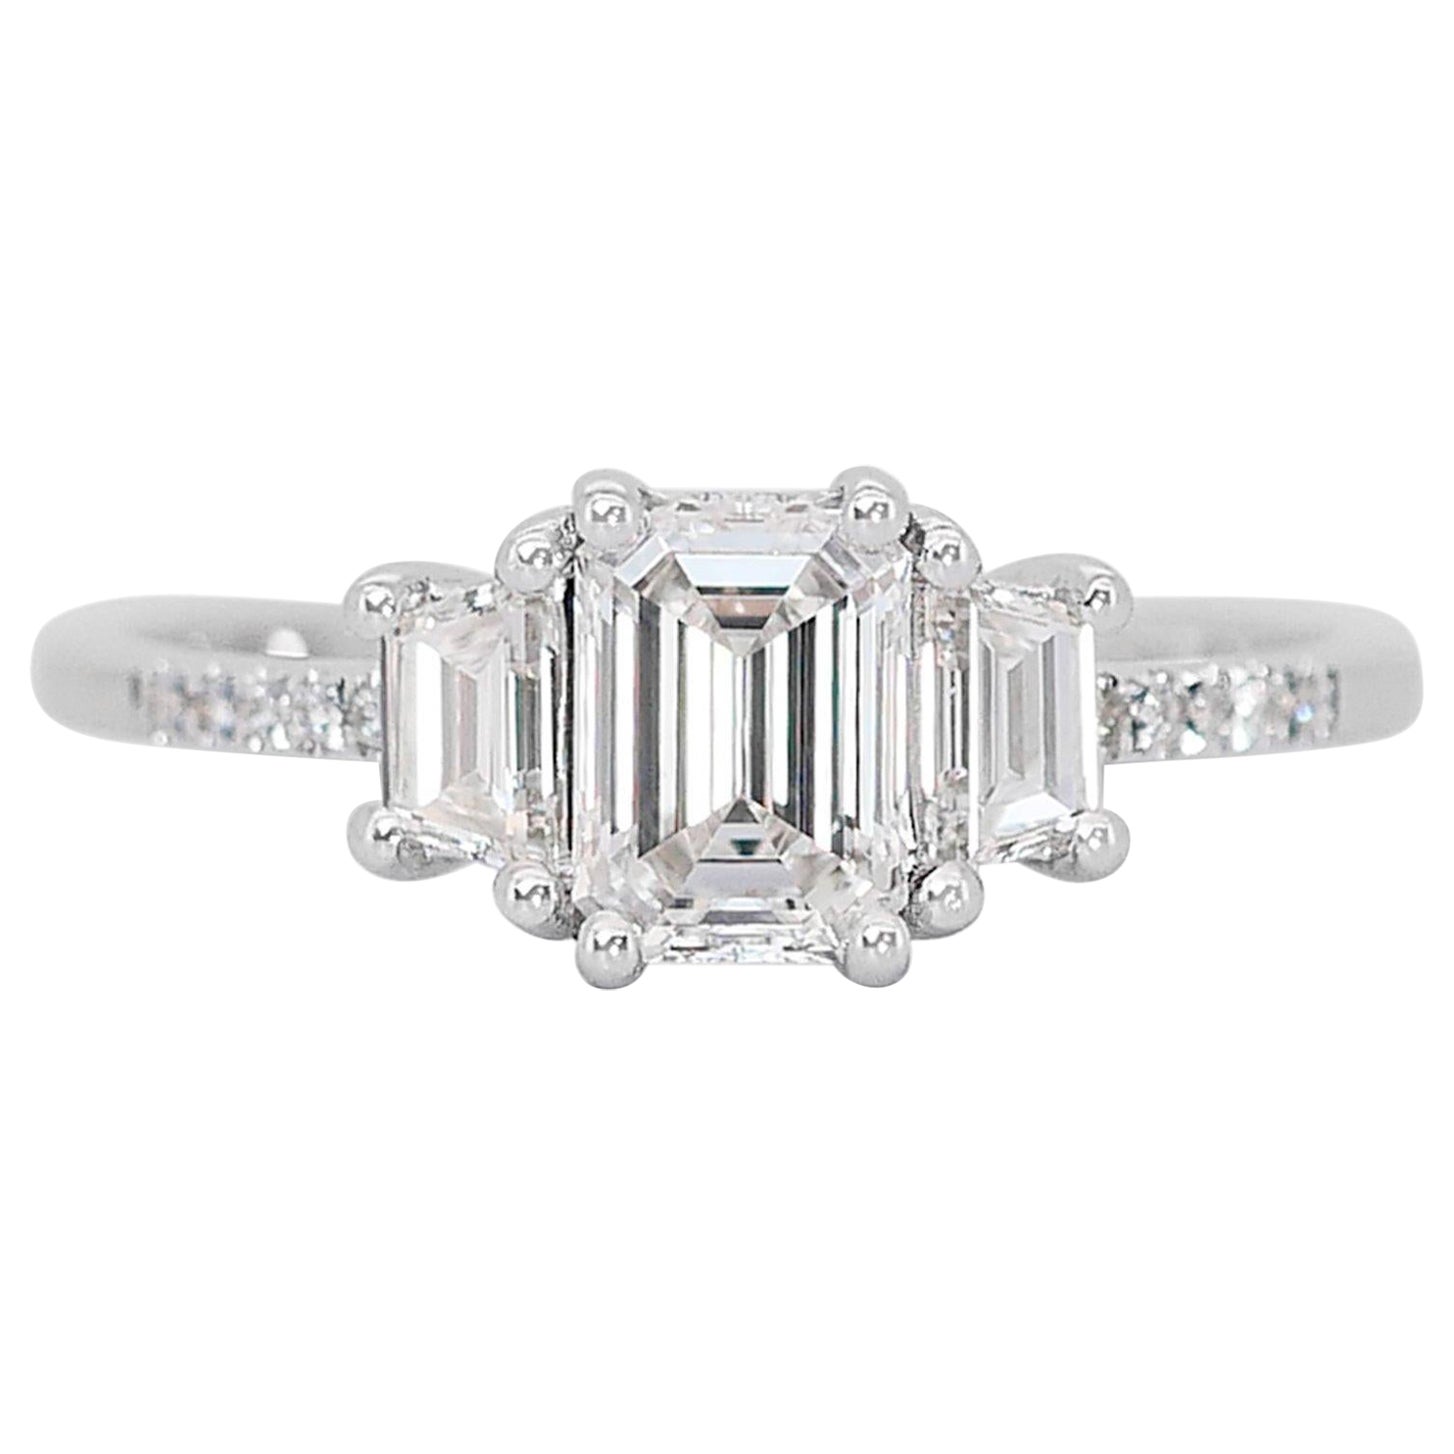 Elegant 1.11ct Diamond 3-Stone Ring in 18k White Gold - IGI Certified